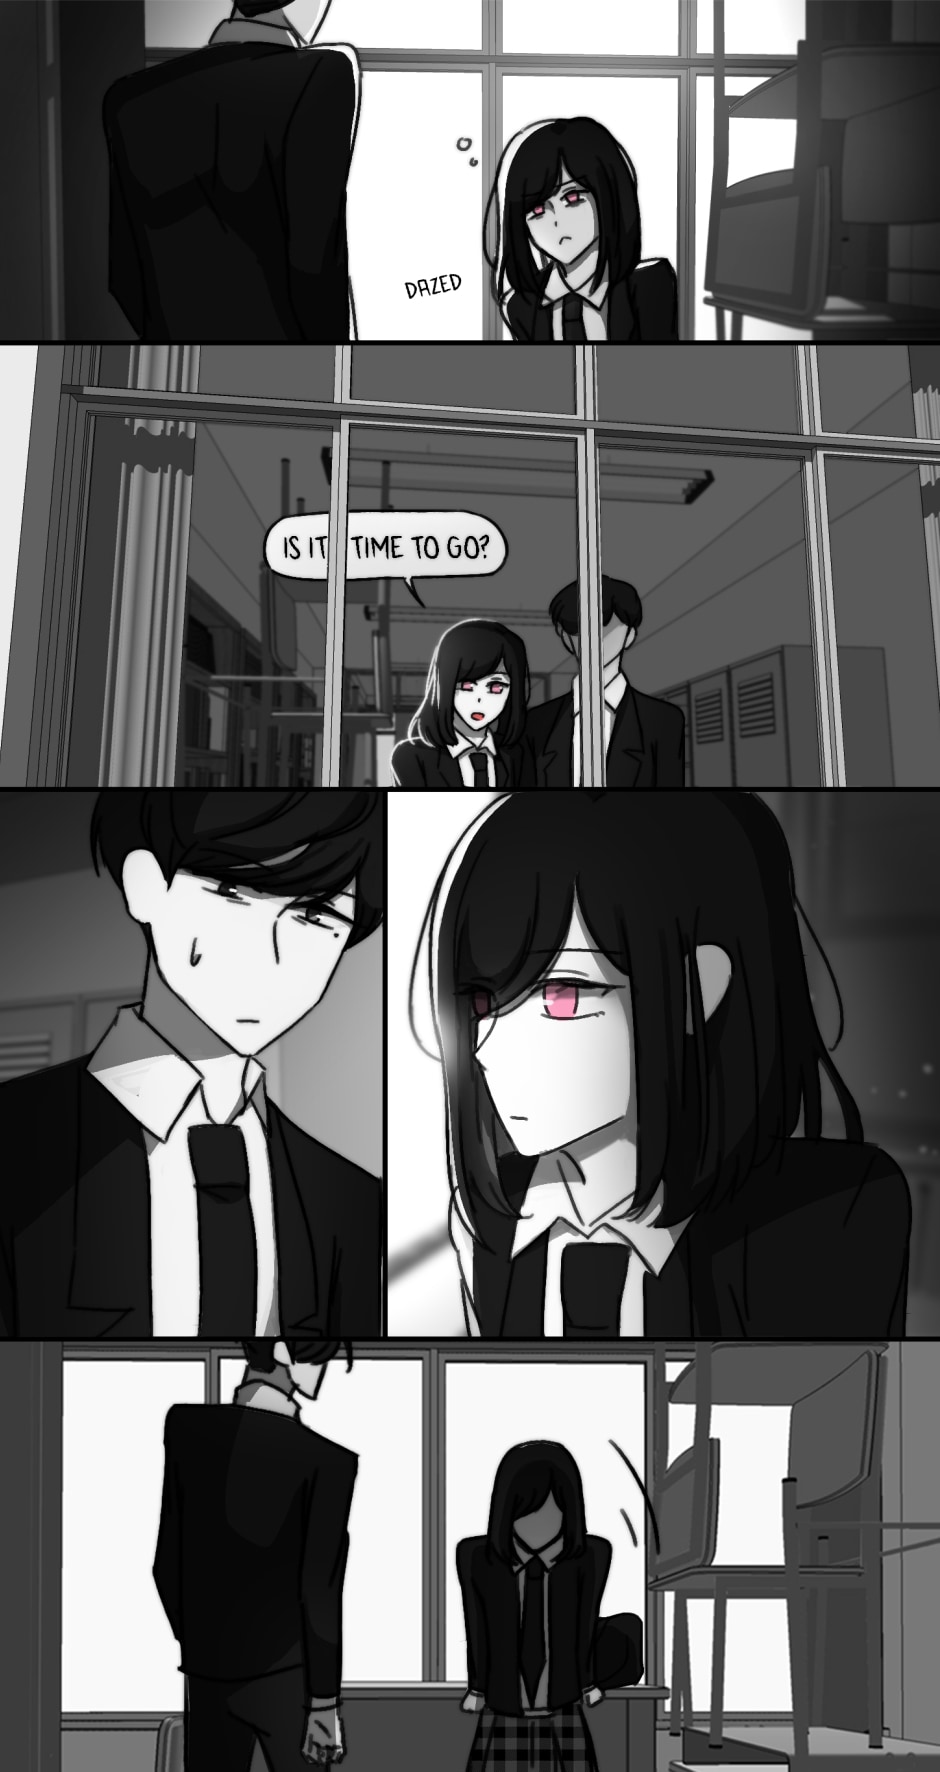 Its So Cruelly Beautiful  Toxic Relationship in Anime and Manga fandom   Anime Amino